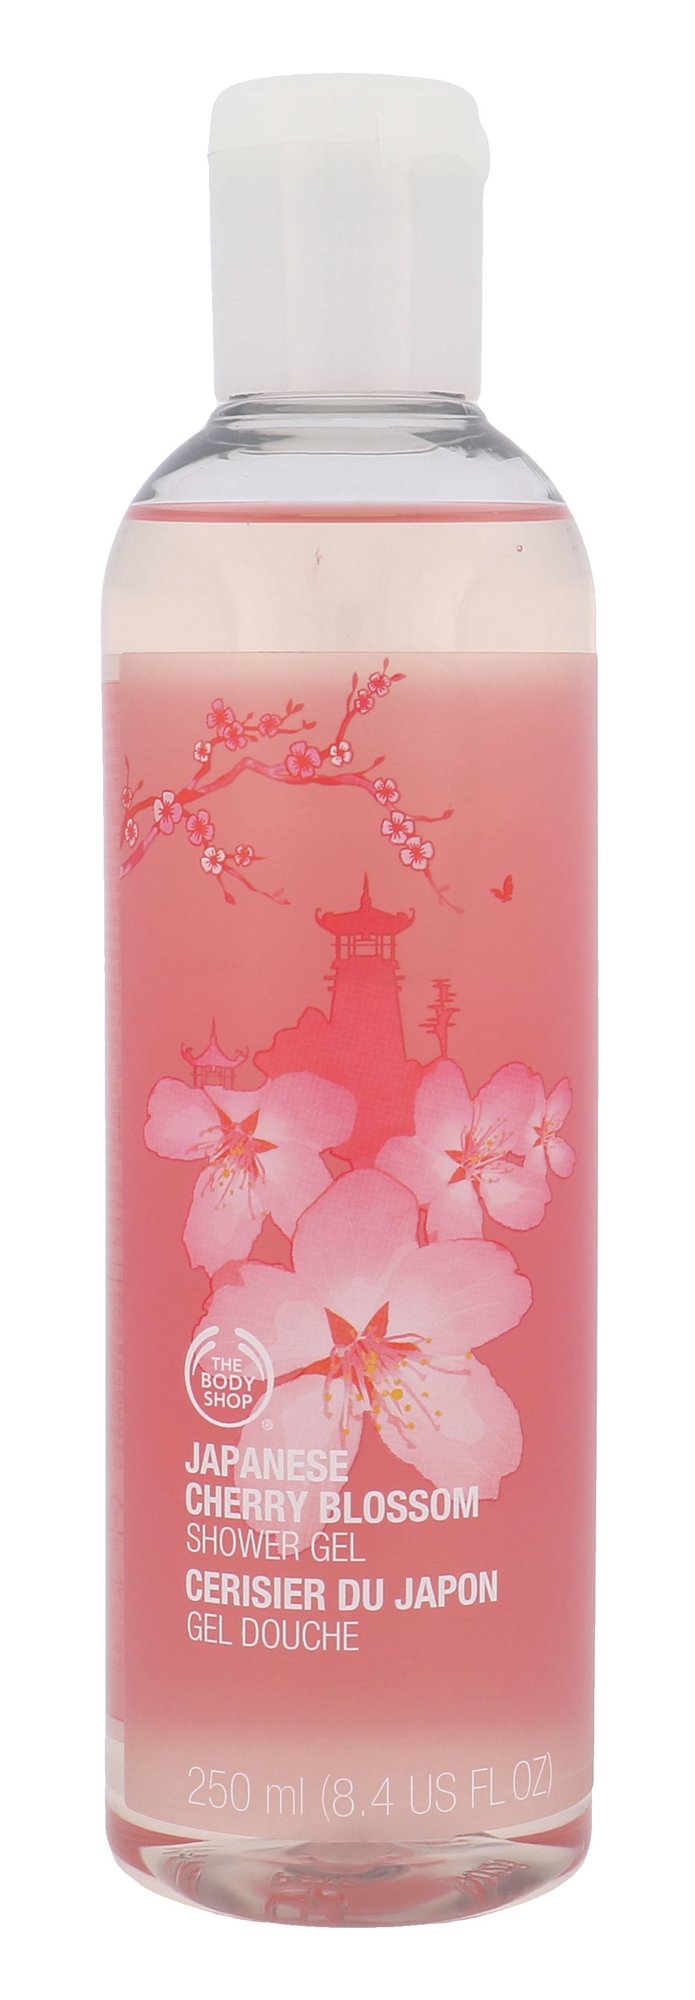 The Body Shop Japanese Cherry Blossom Shower Gel